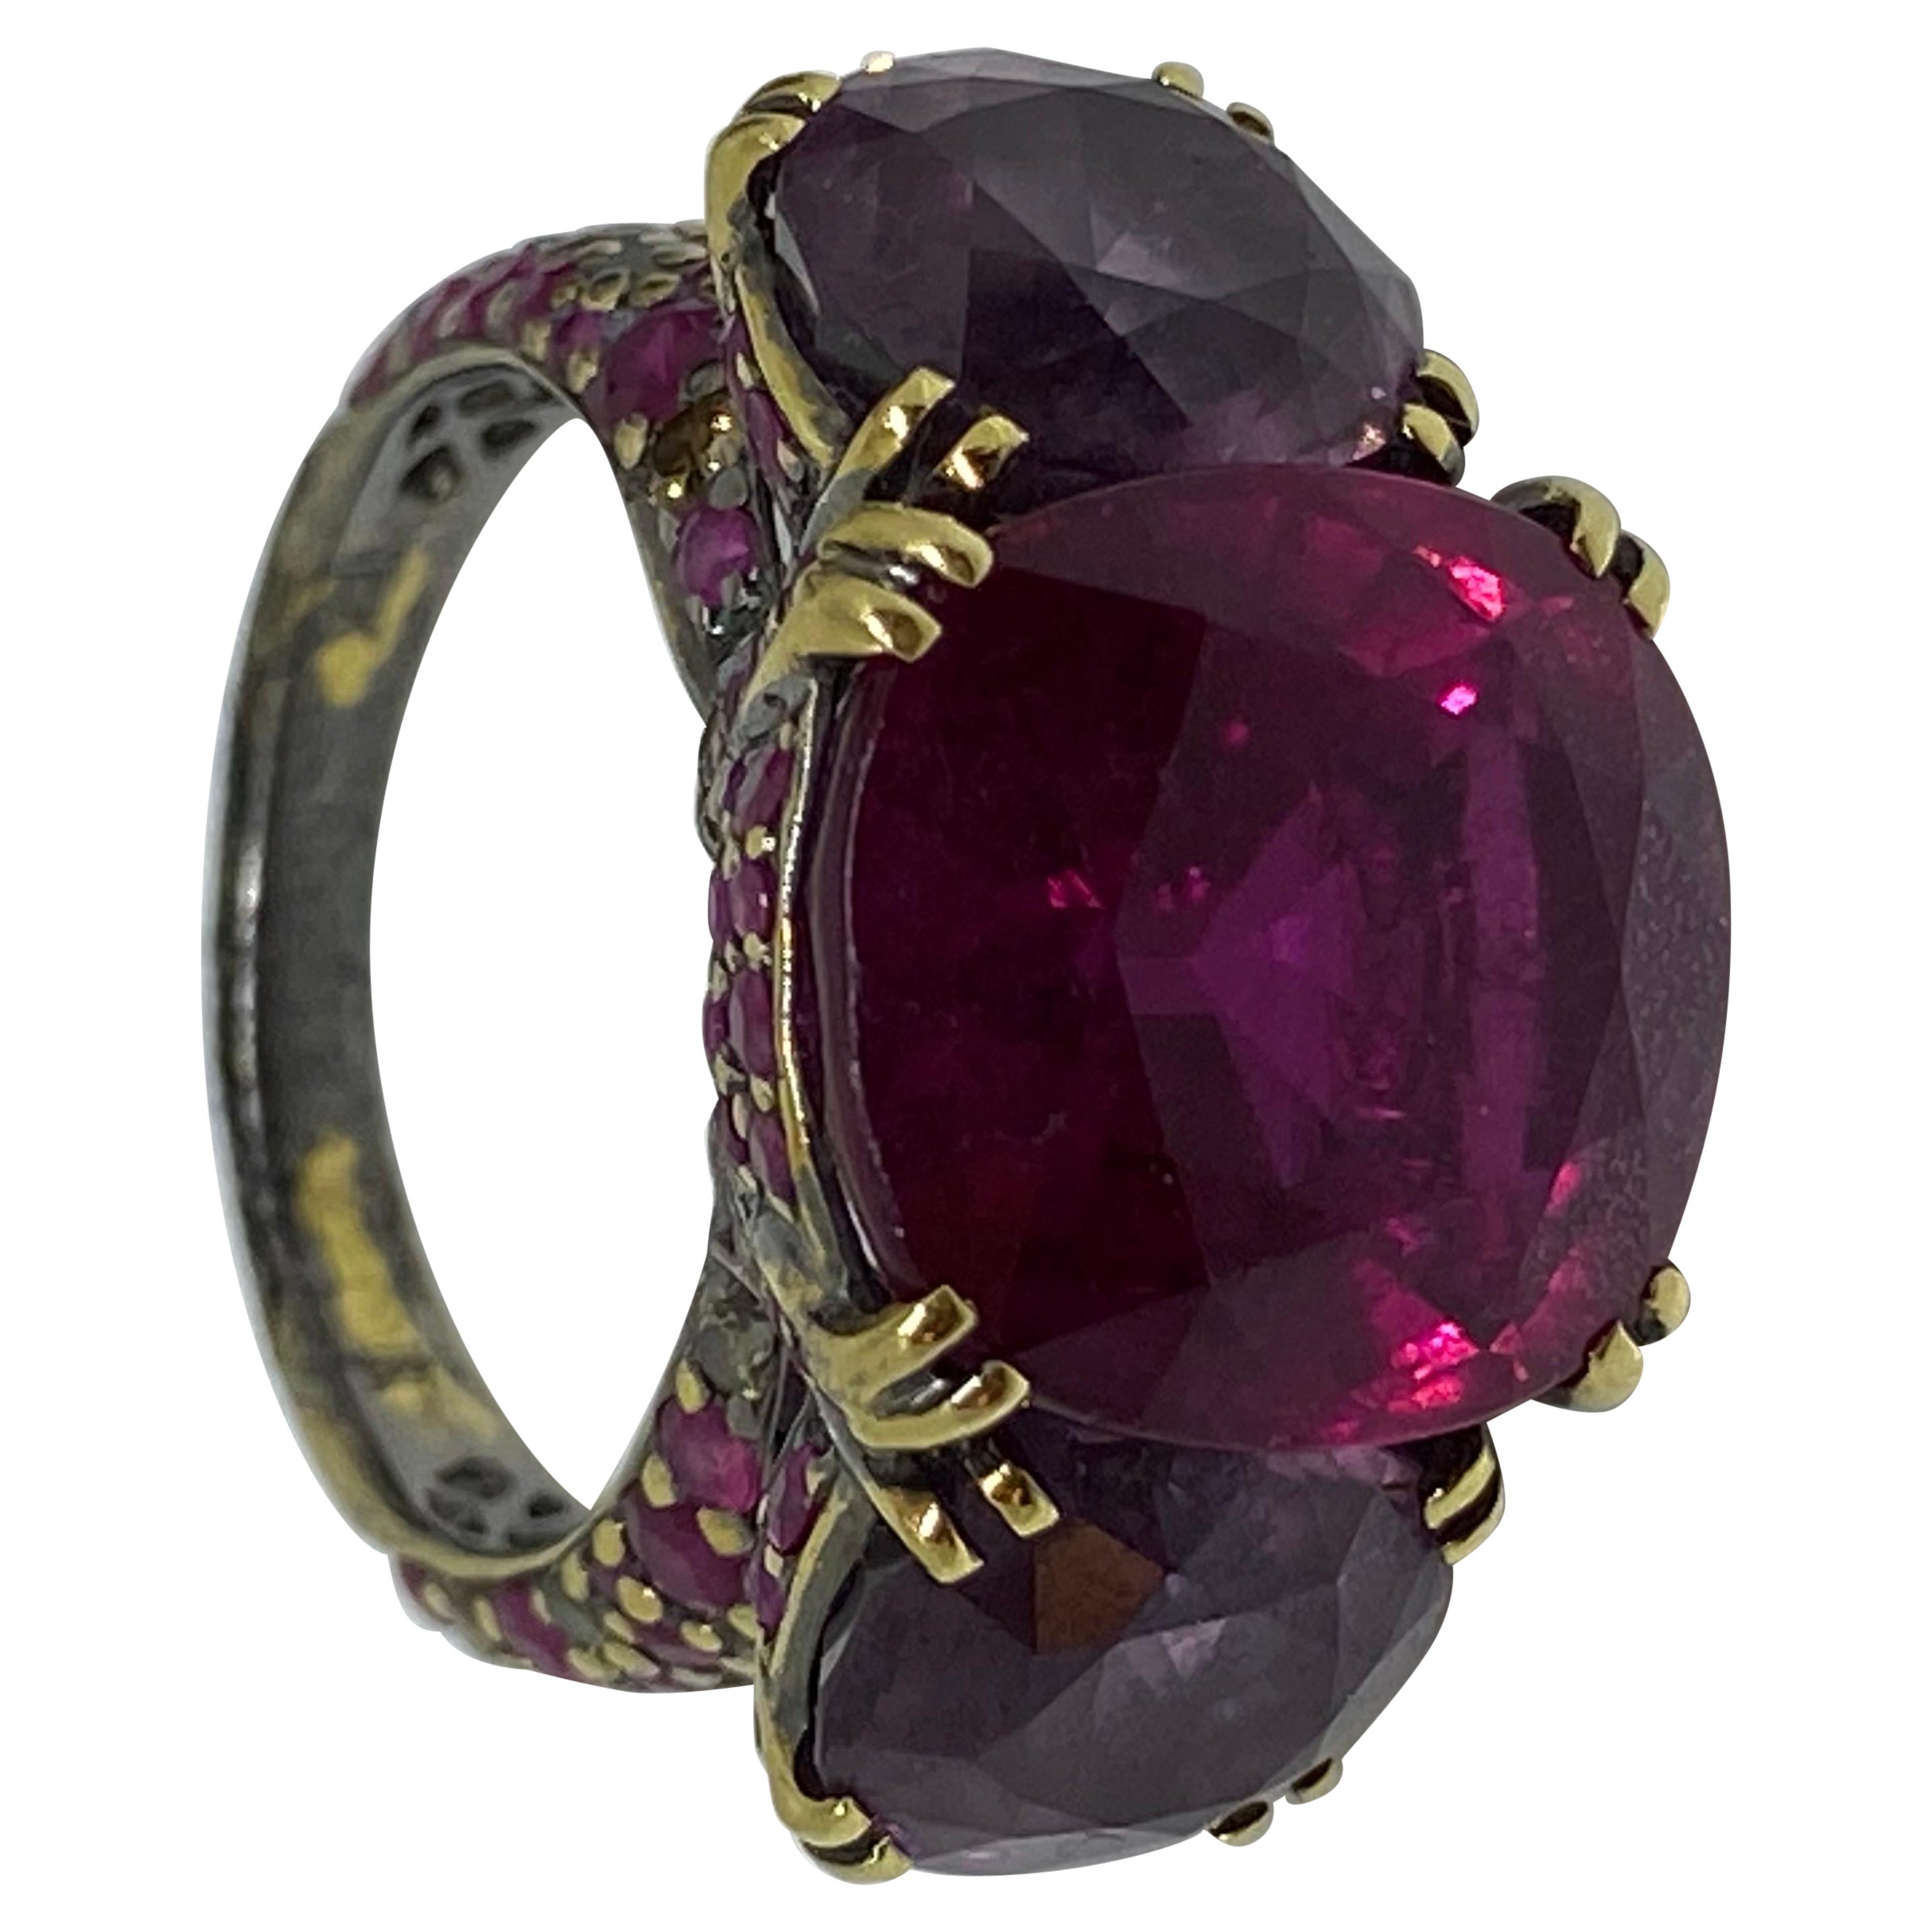 JOHN HARDY 18K Diamond/Sapphire/Tourmaline/Spinel Cinta Cocktail Ring Size: 6.5 For Sale